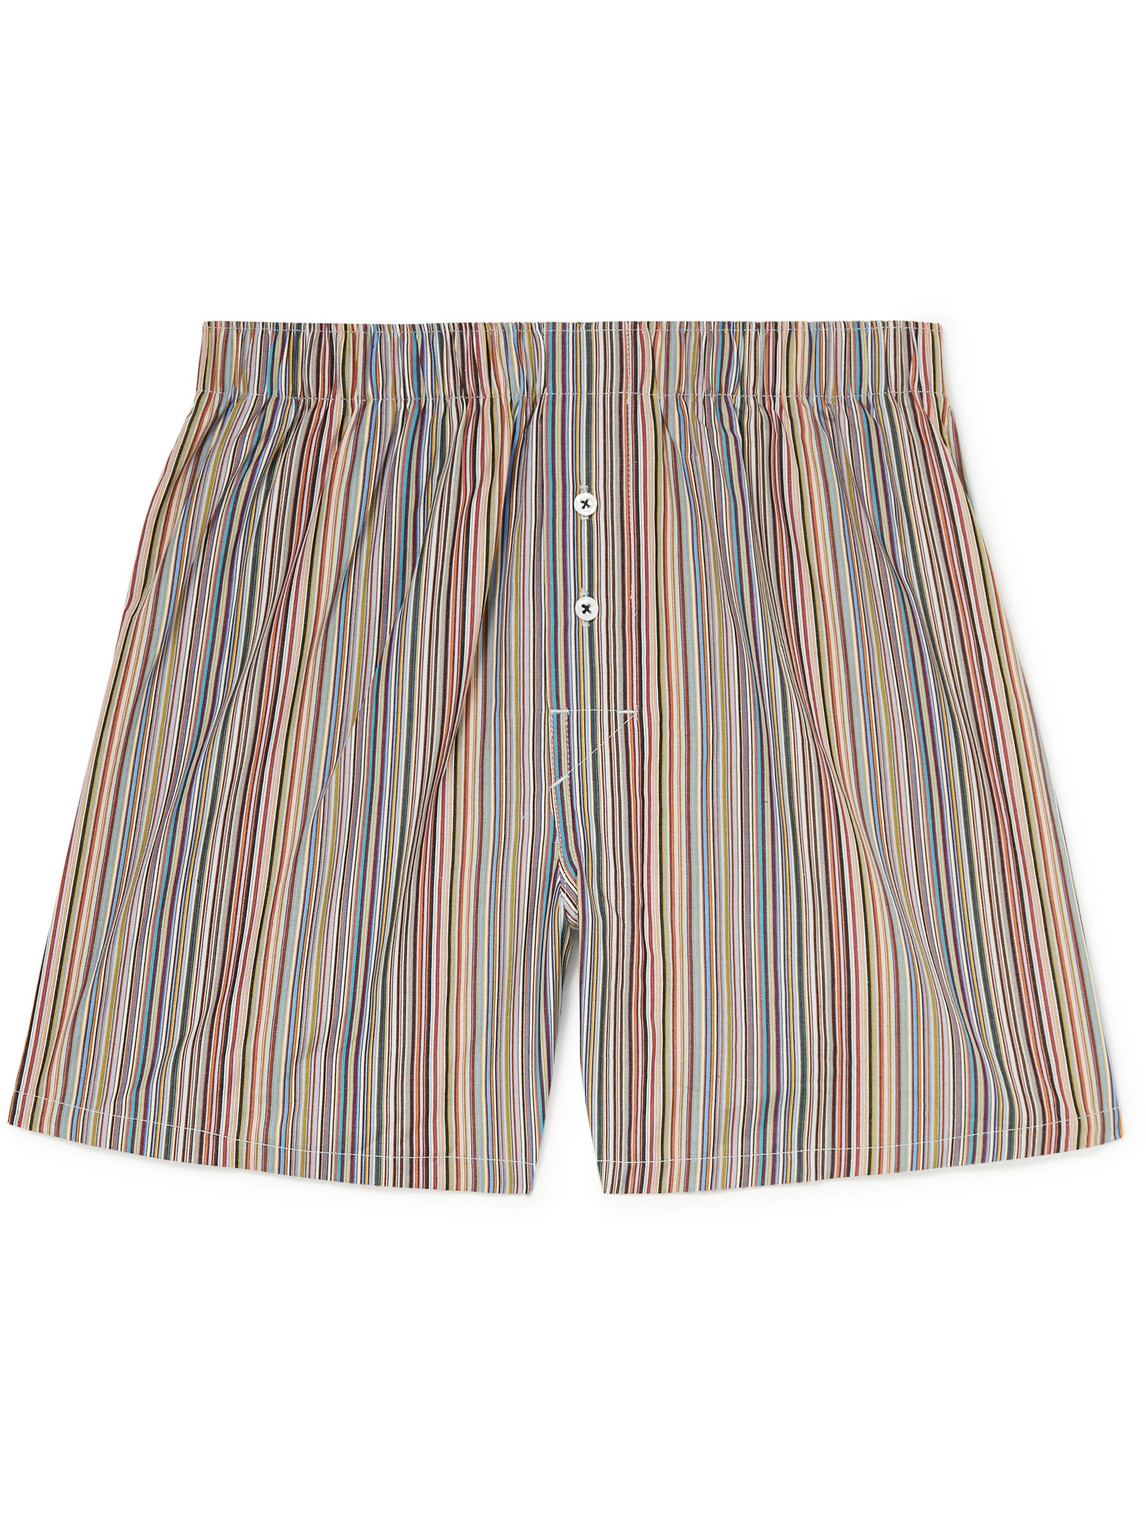 Paul Smith - Striped Cotton-Poplin Boxer Shorts - Men - Orange - M von Paul Smith